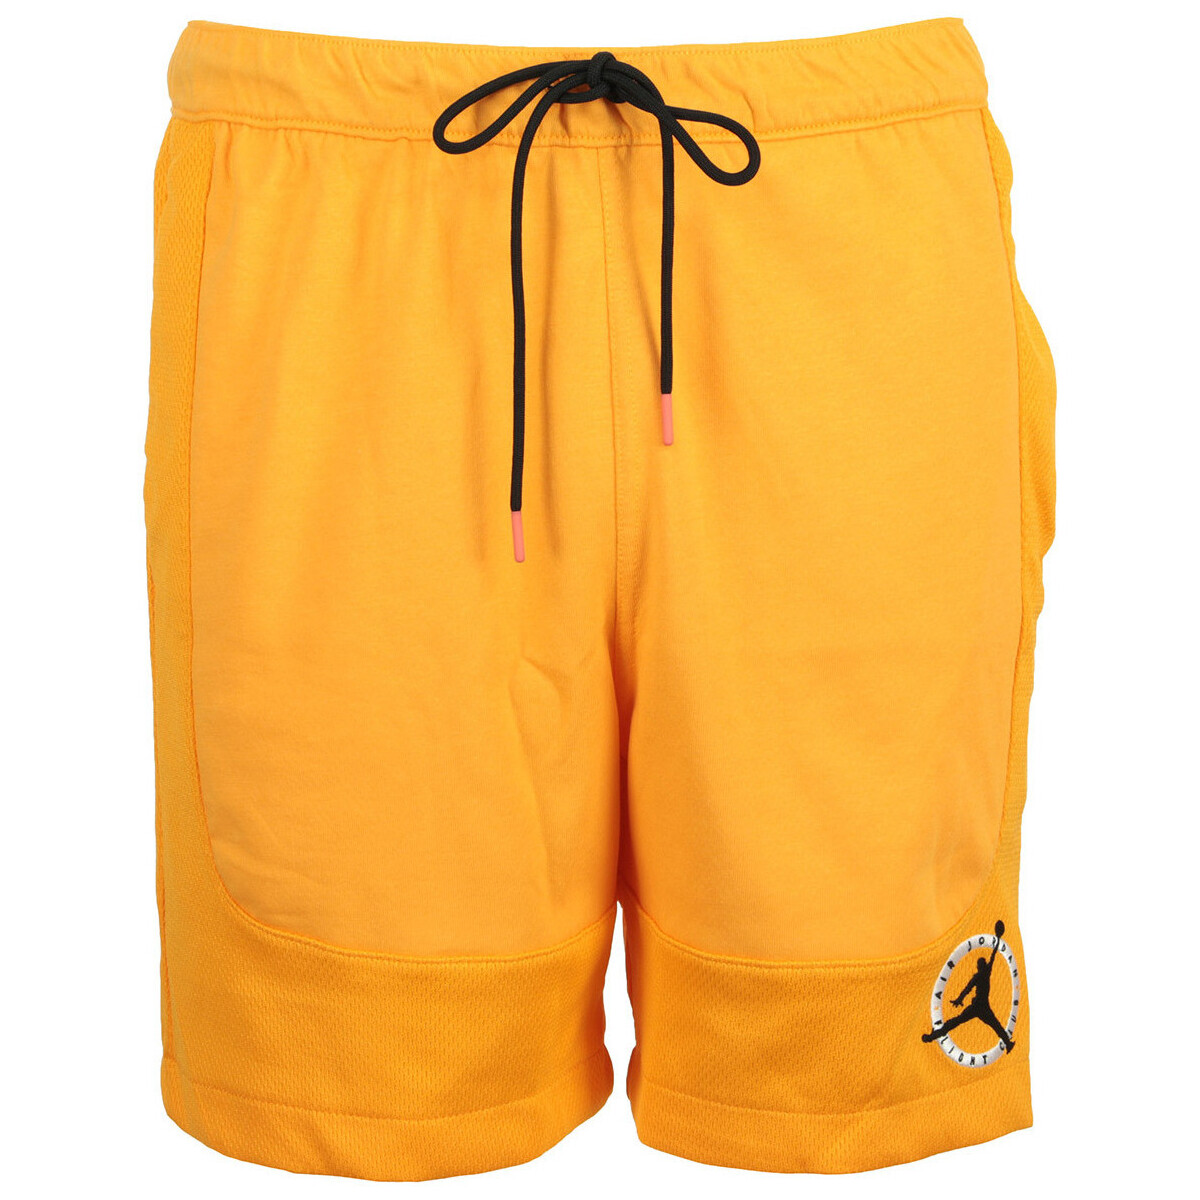 textil Hombre Shorts / Bermudas Nike M Jordan Flt Mvp Mesh Short F2 Naranja